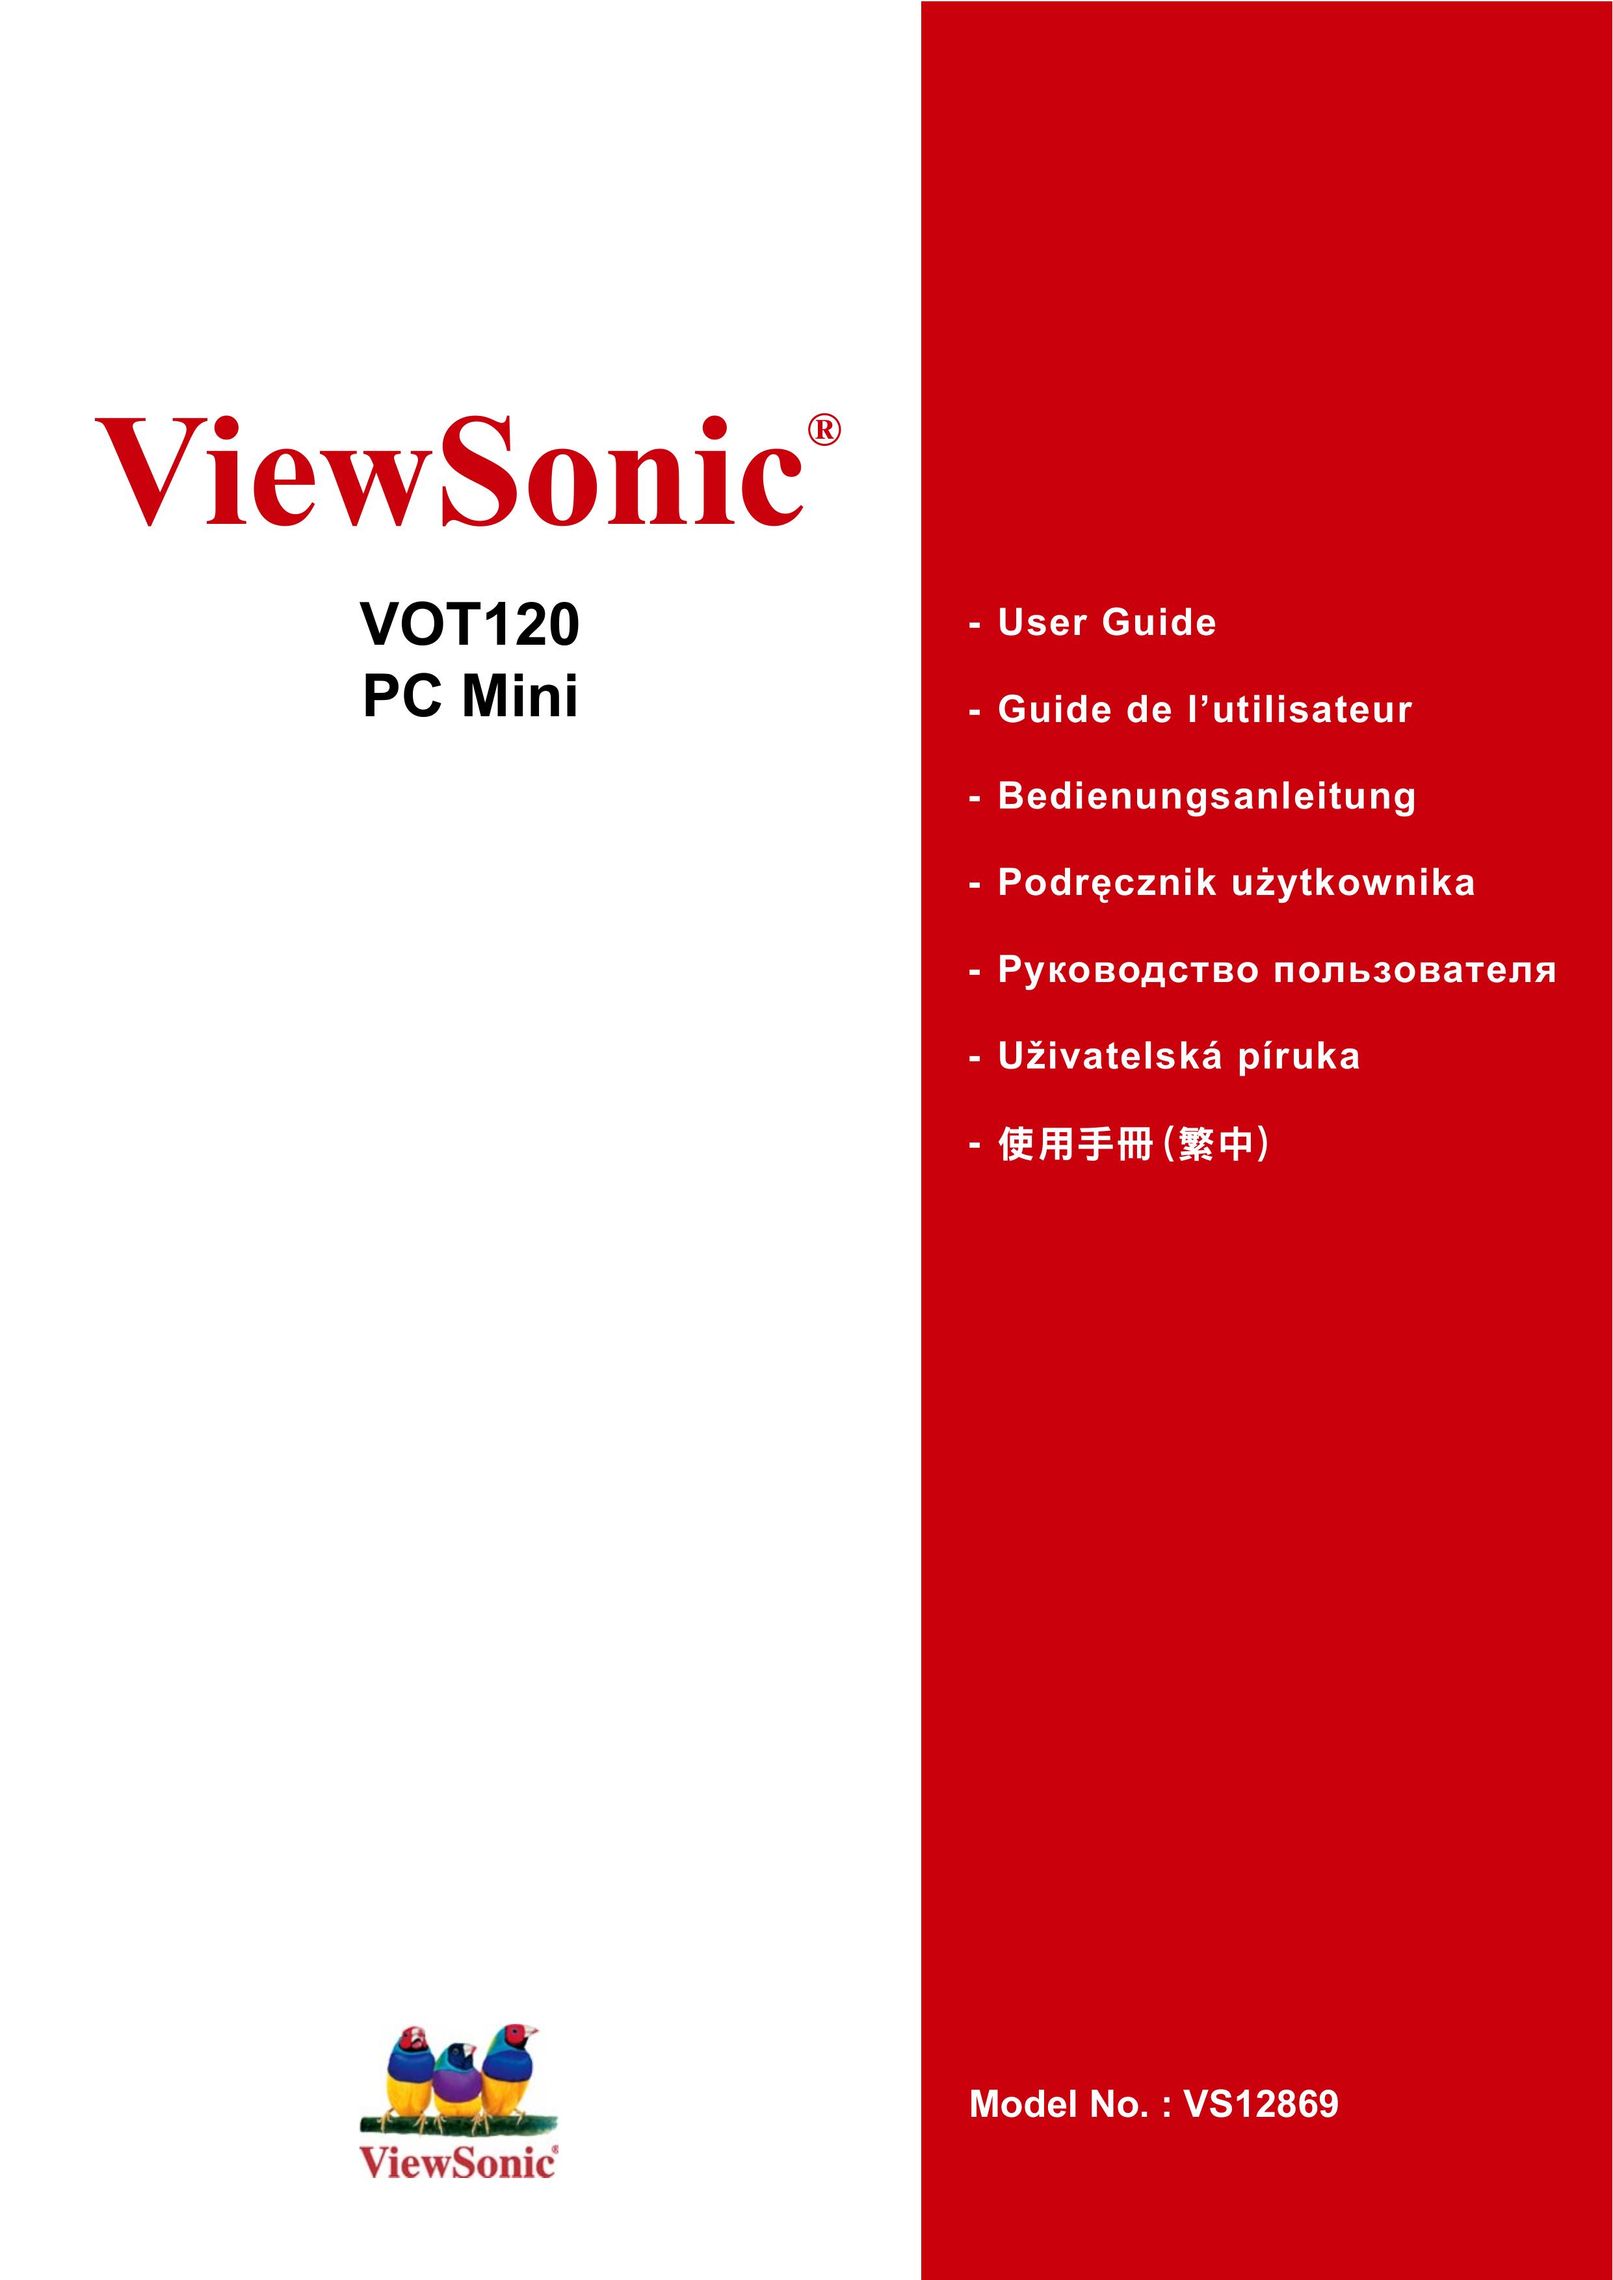 ViewSonic VOT120 Personal Computer User Manual